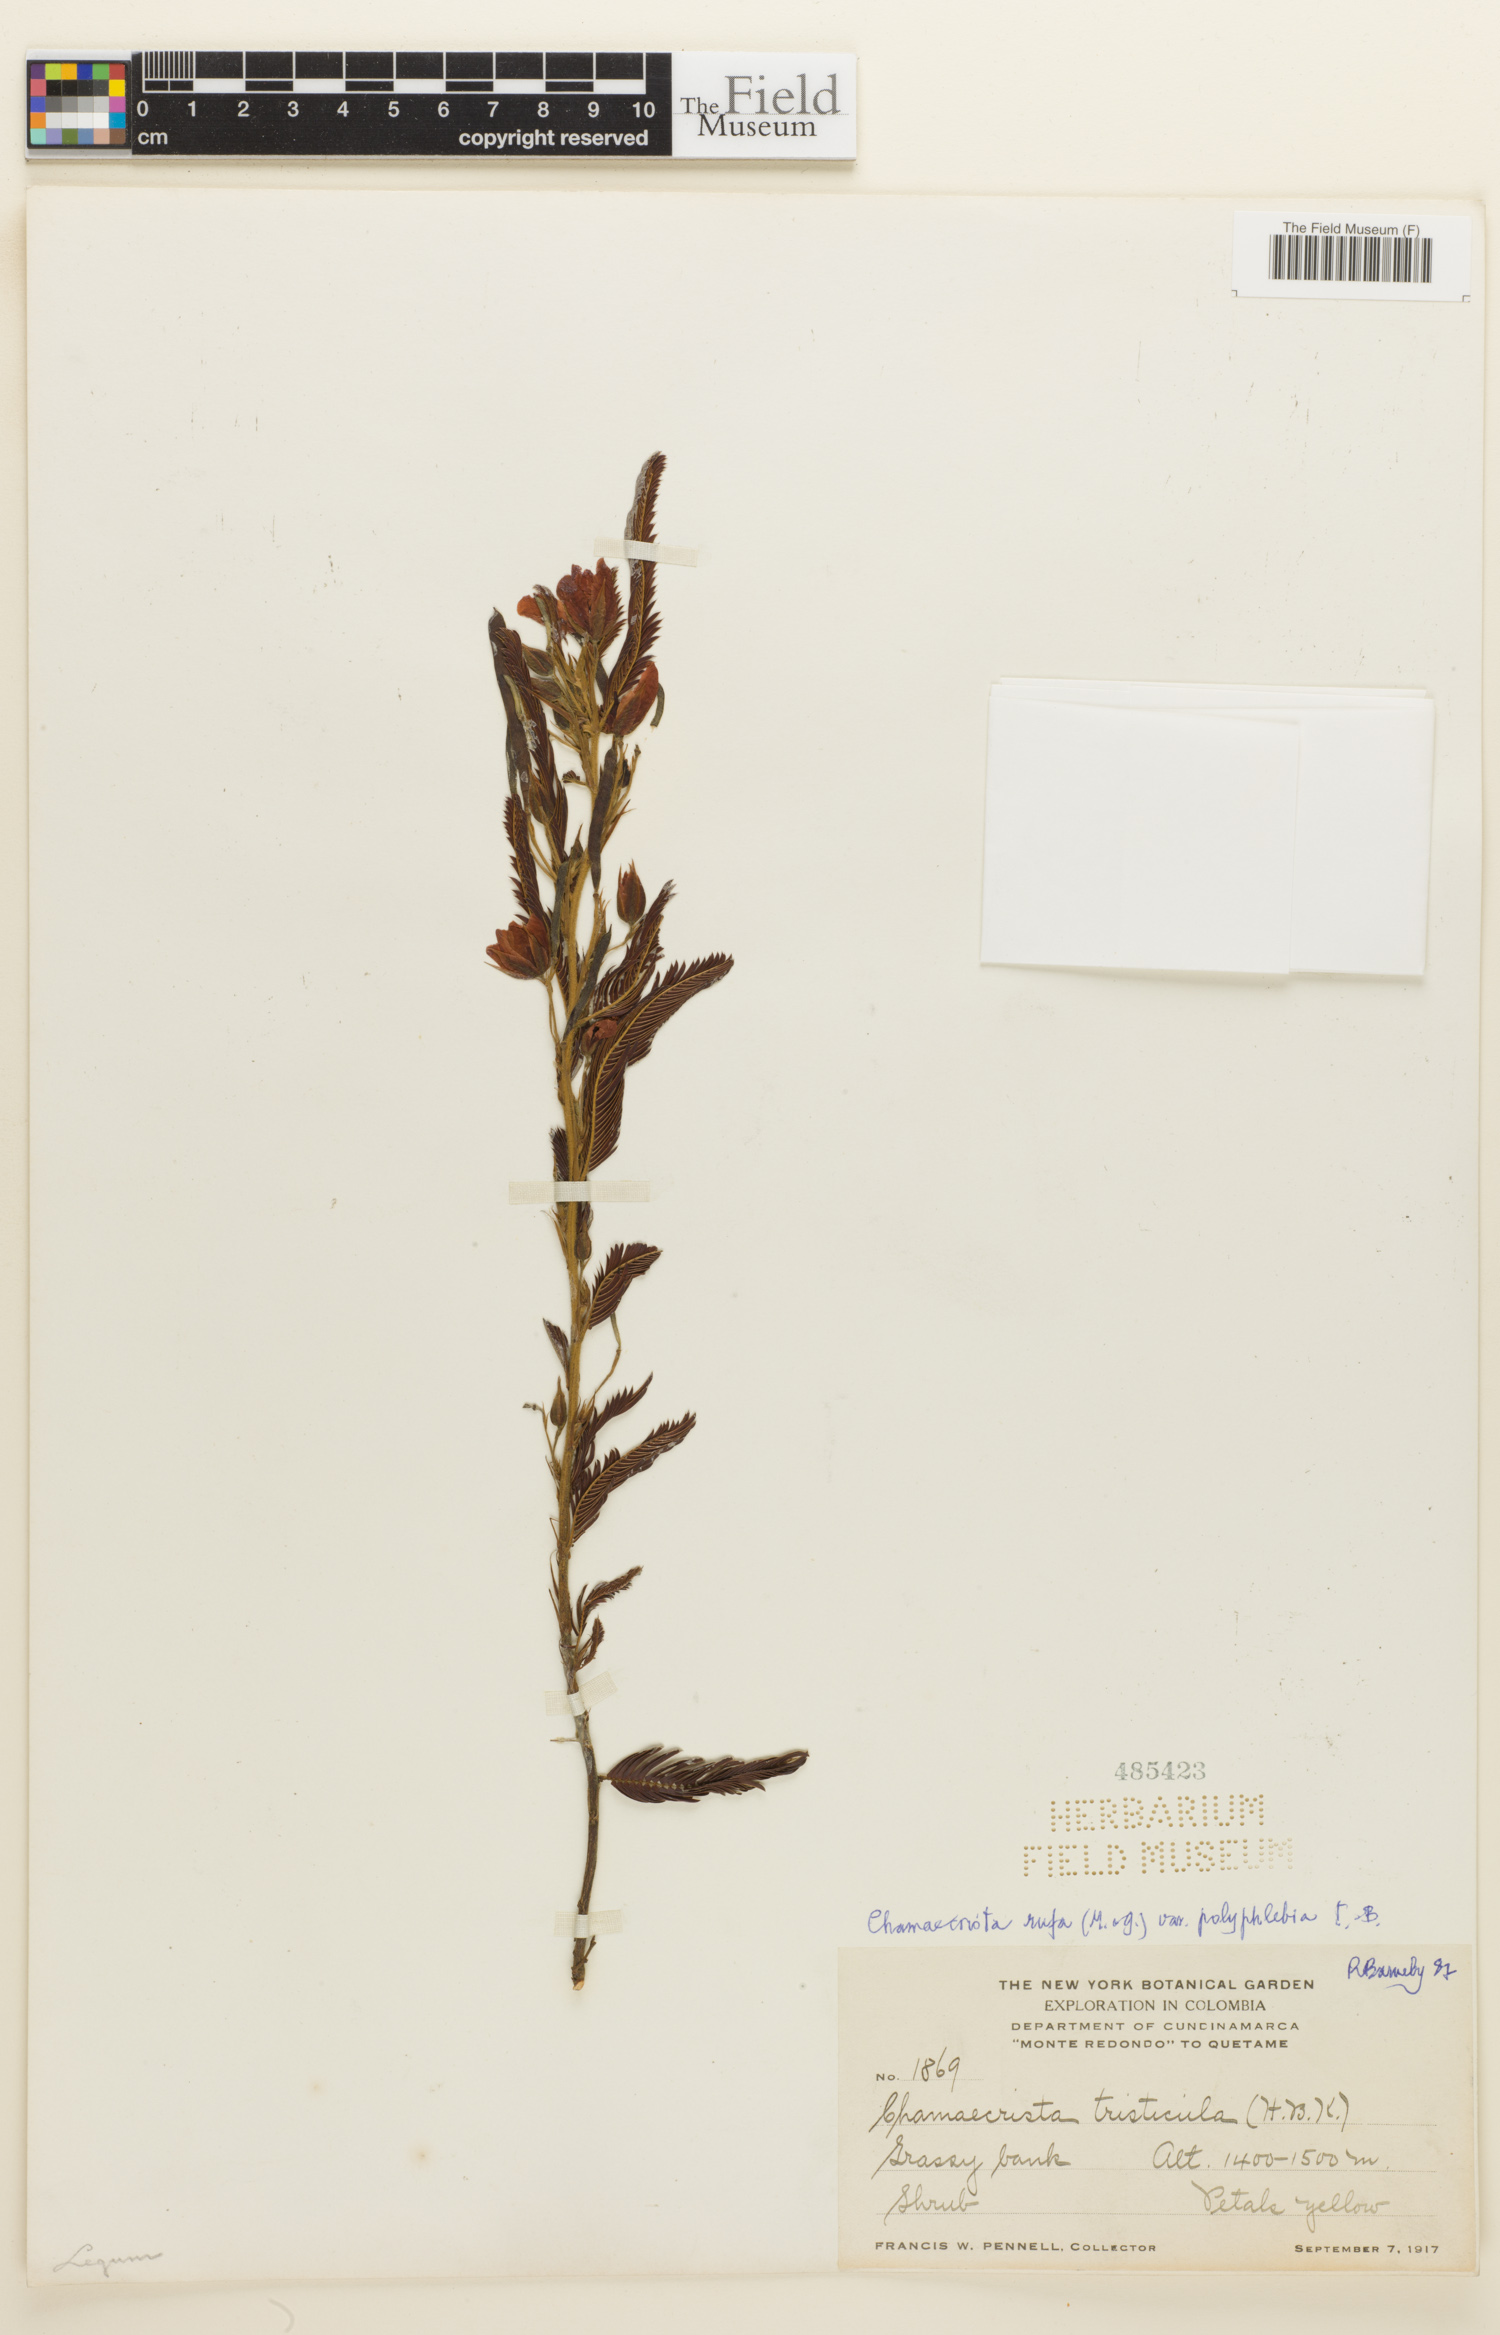 Chamaecrista rufa var. polyphlebia image